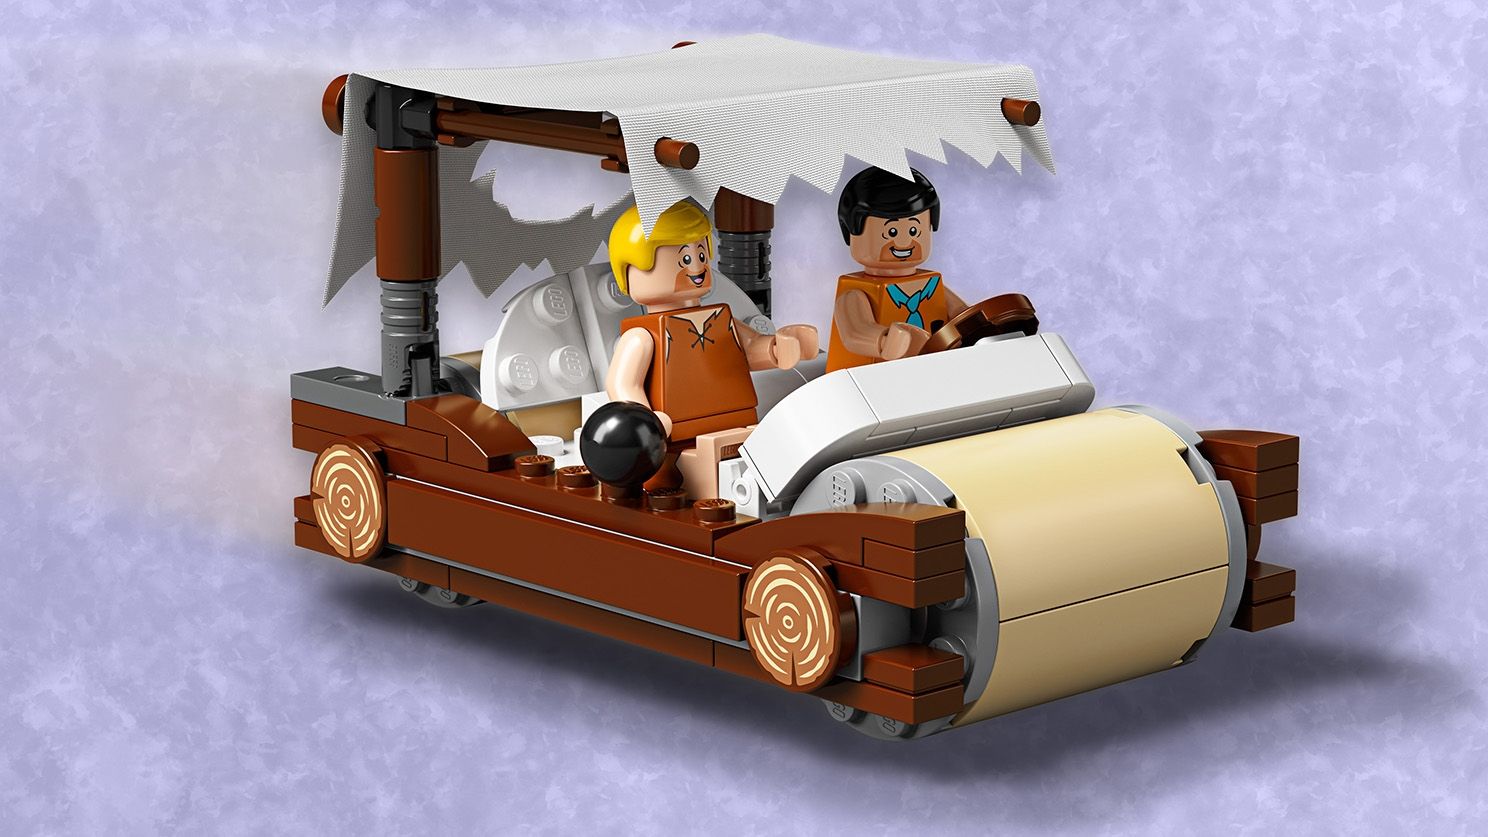 LEGO Ideas 21316 The Flintstones - Familie Feuerstein LEGO_21316_WEB_SEC05_1488.jpg